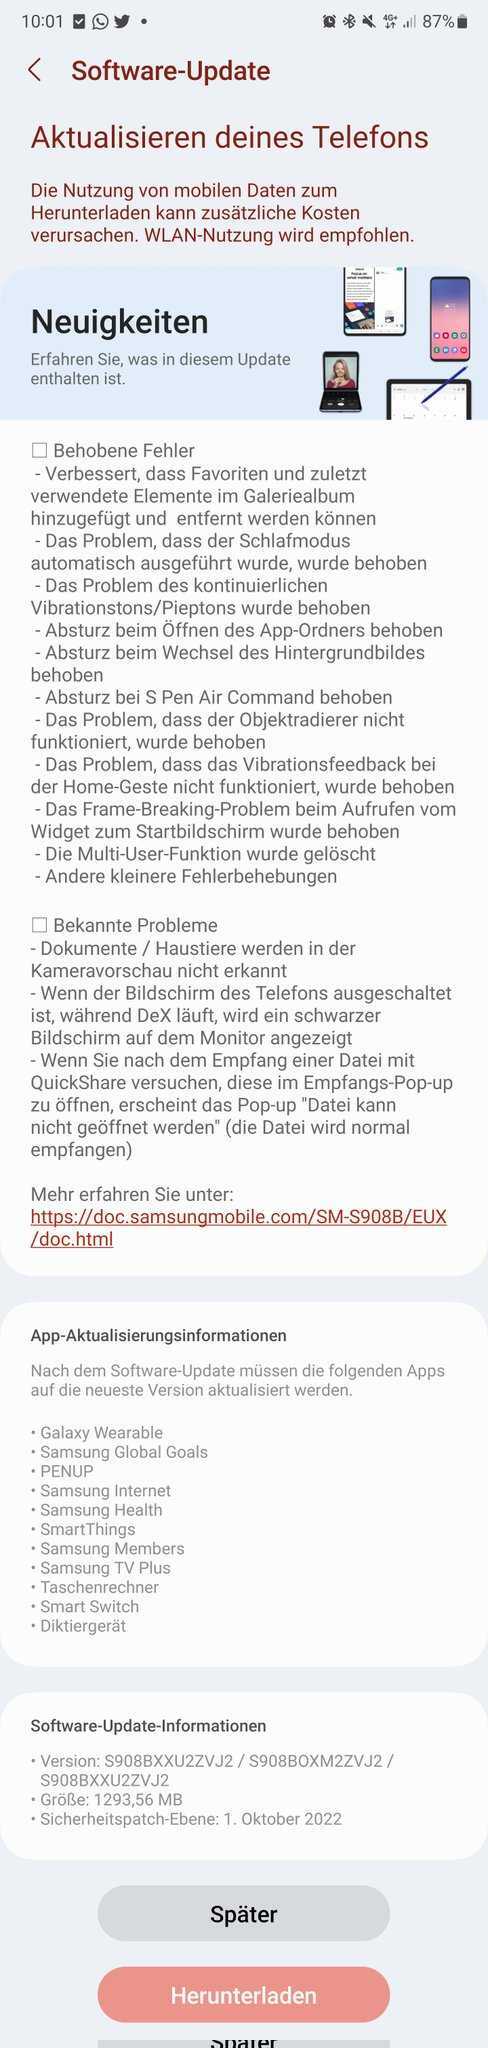 Galaxy S22 OneUI 5 beta 4 update 